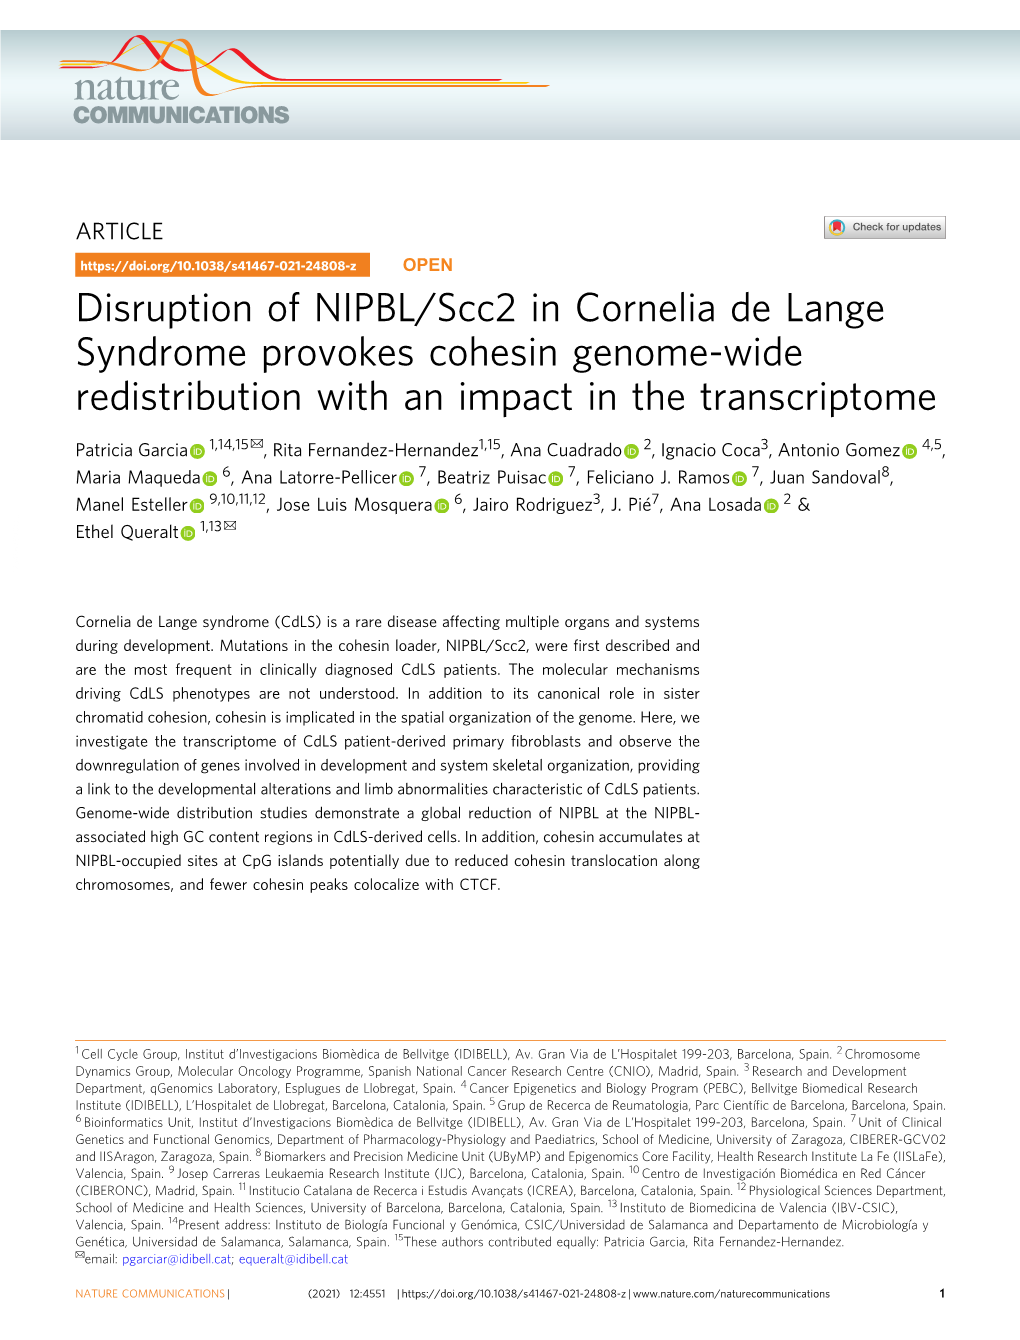 Disruption of NIPBL/Scc2 in Cornelia De Lange Syndrome Provokes